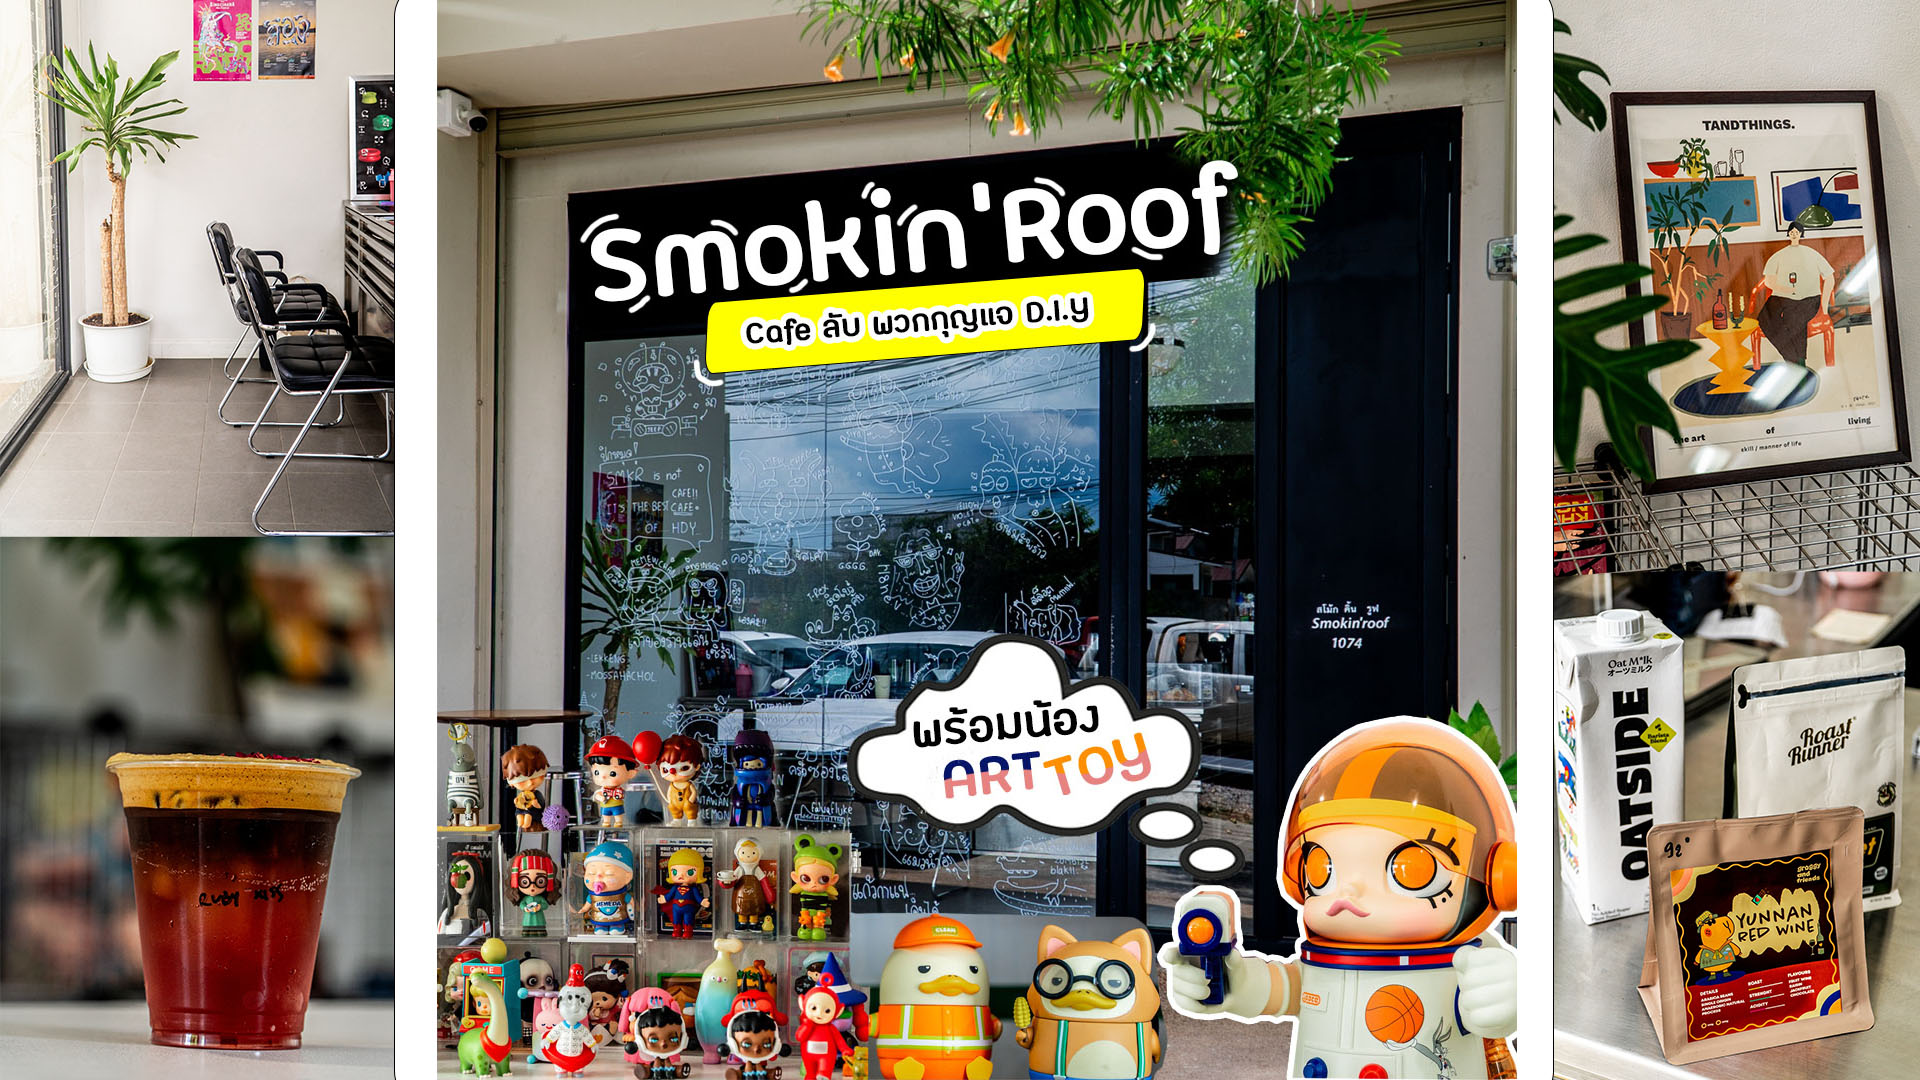 Smokin’ roof | Sogood RV